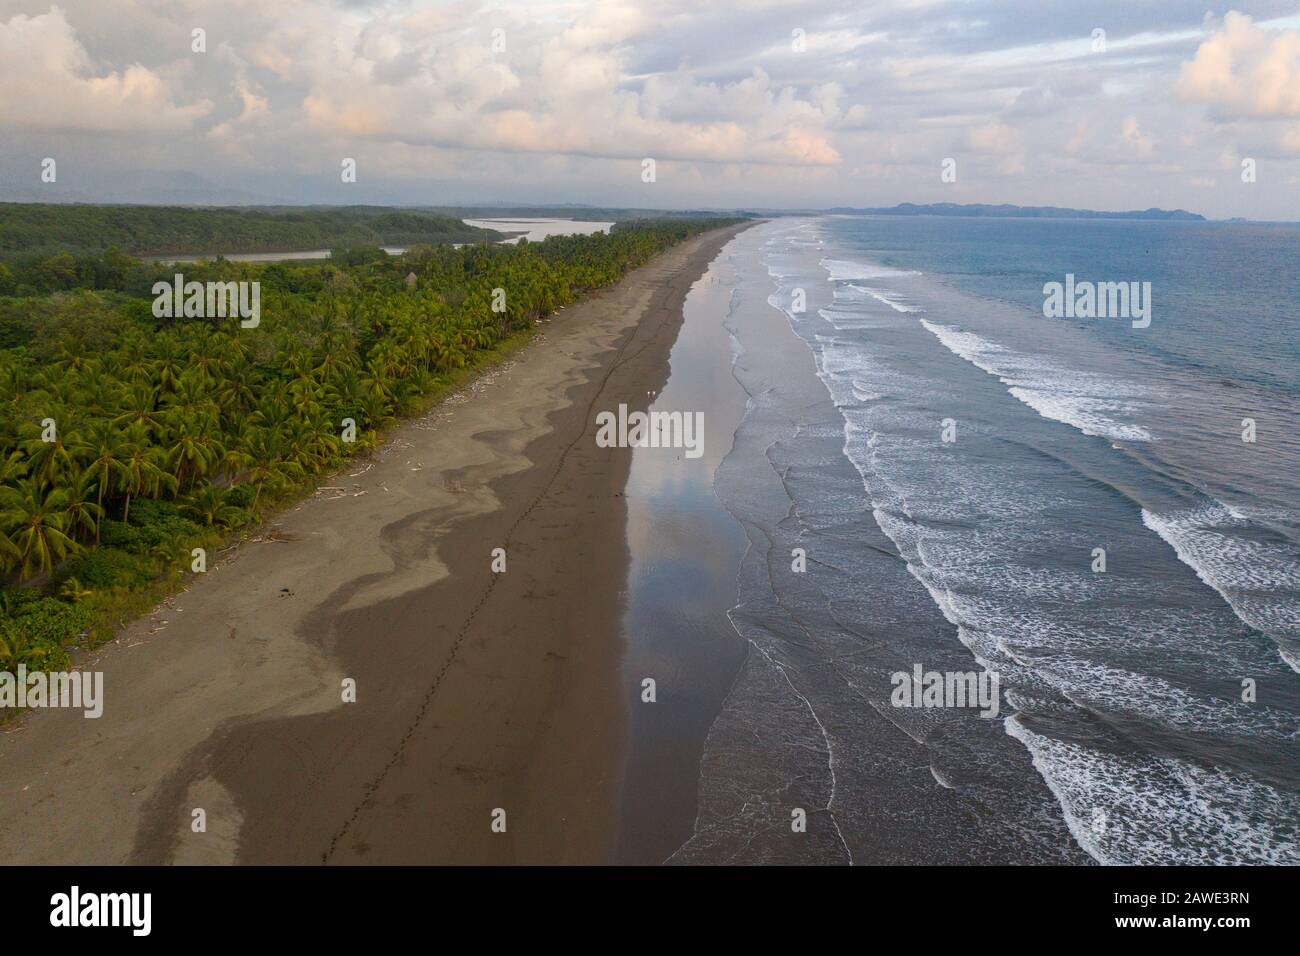 Coastline and beach near Parrita and Parque Nacional Manuel Antonio, Puntarenas province, Costa Rica Stock Photo